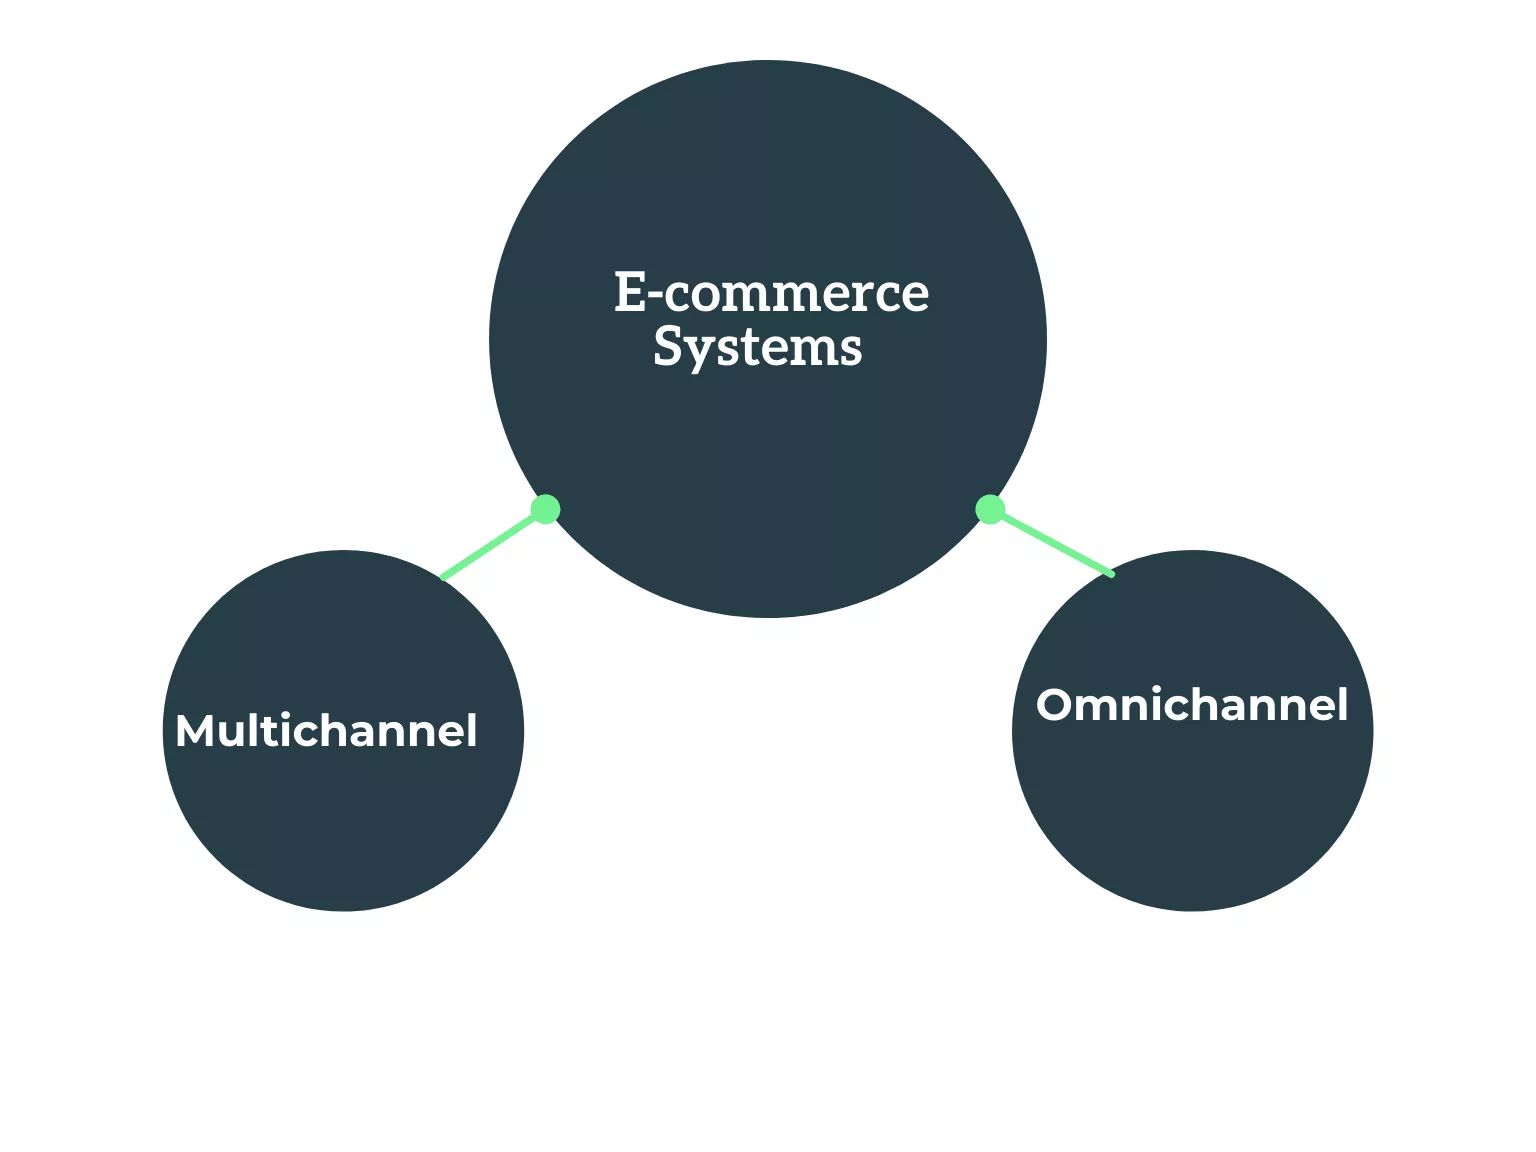 Omnichannel vs multichannel E-commerce systems